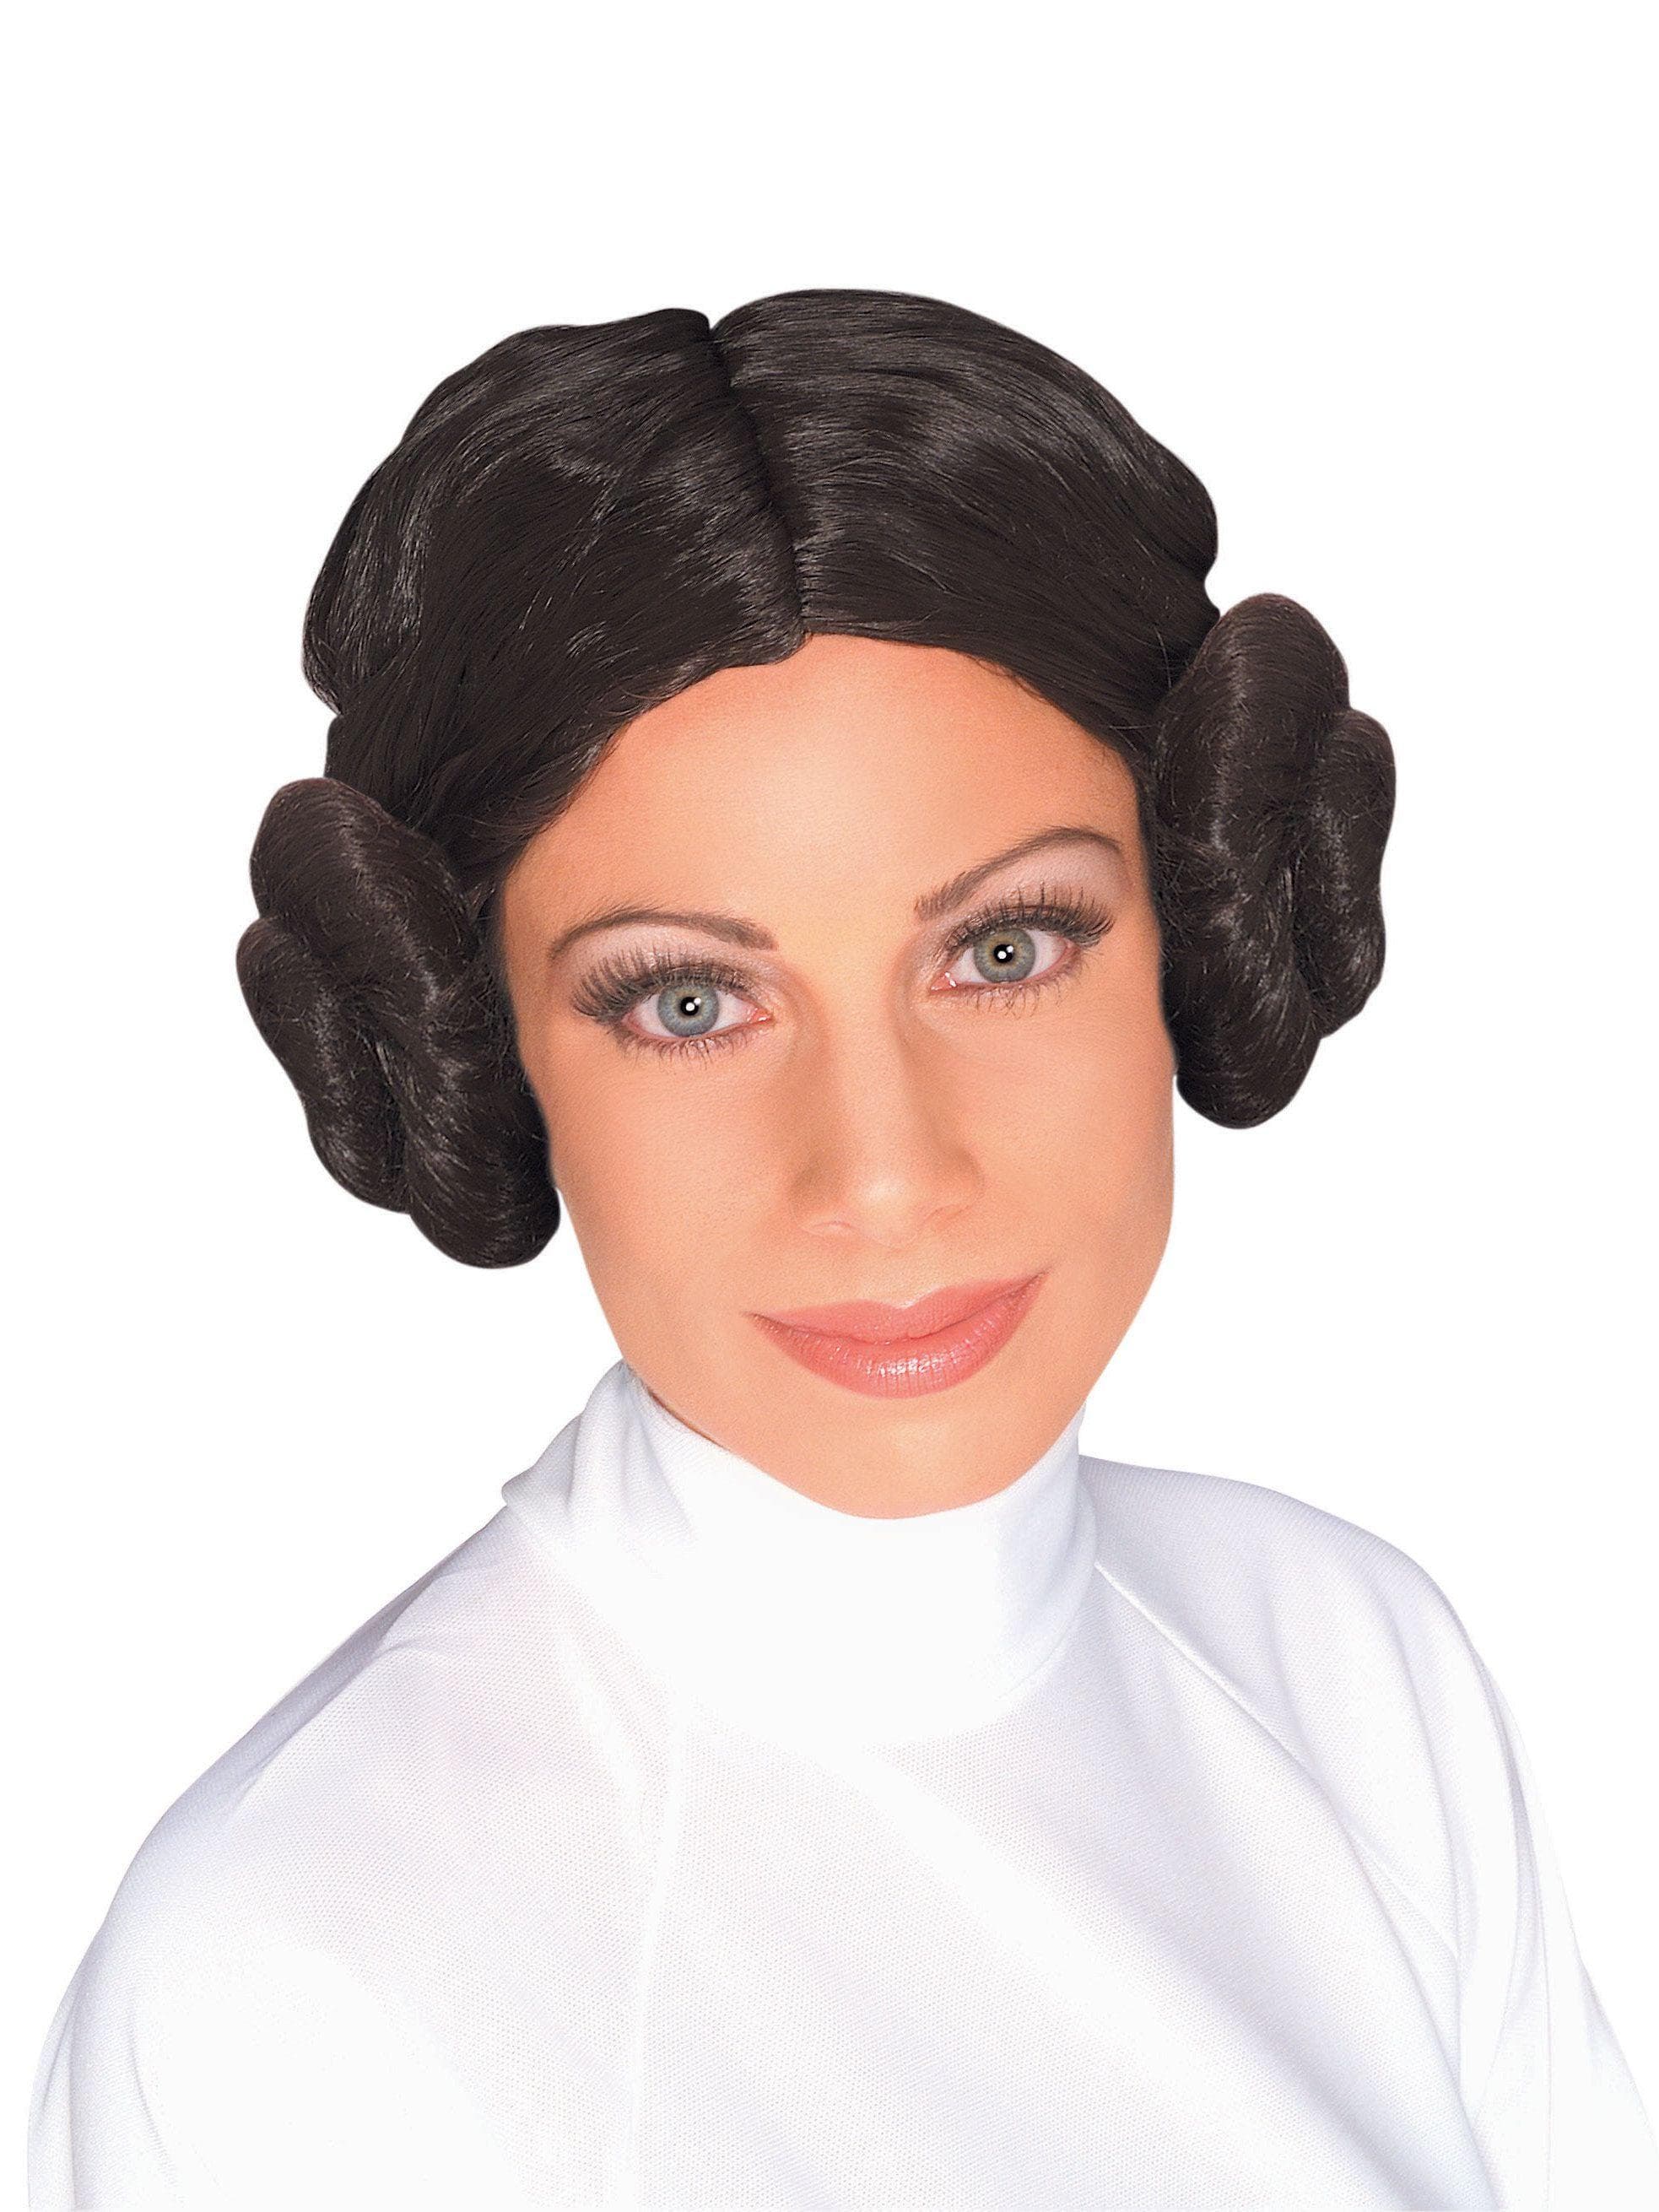 Girls' Star Wars Princess Leia Wig - costumes.com